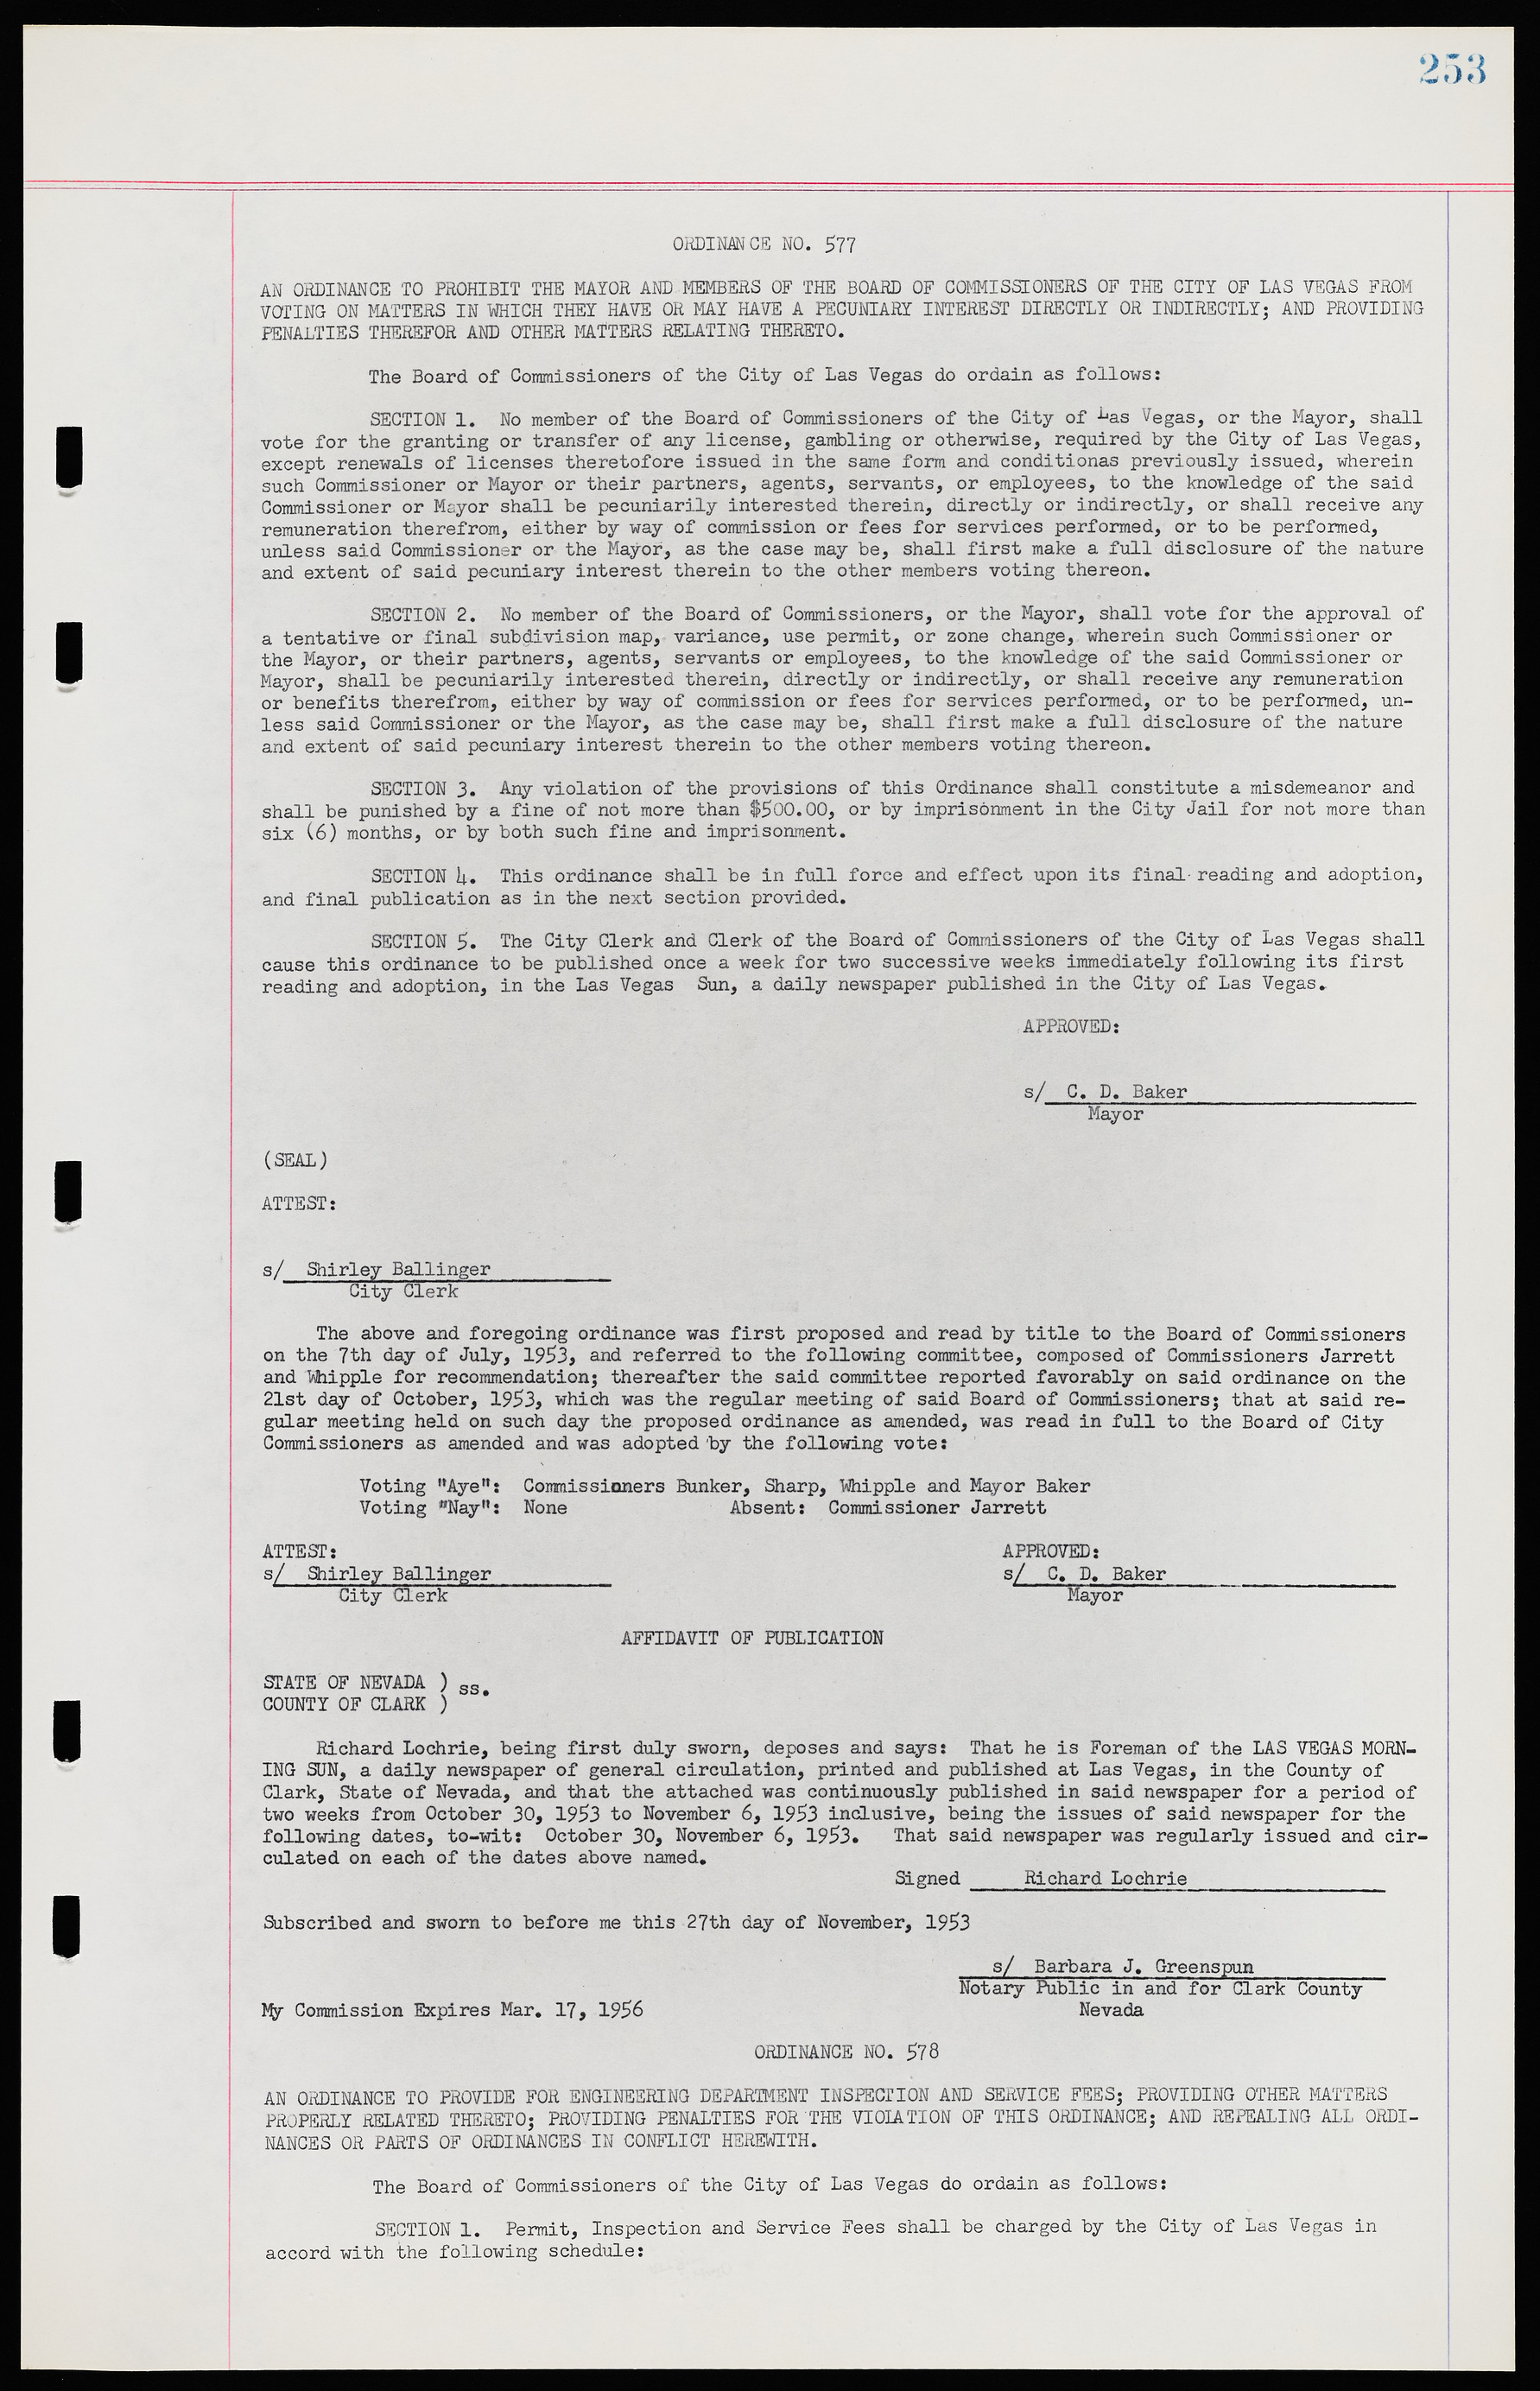 Las Vegas City Ordinances, November 13, 1950 to August 6, 1958, lvc000015-261